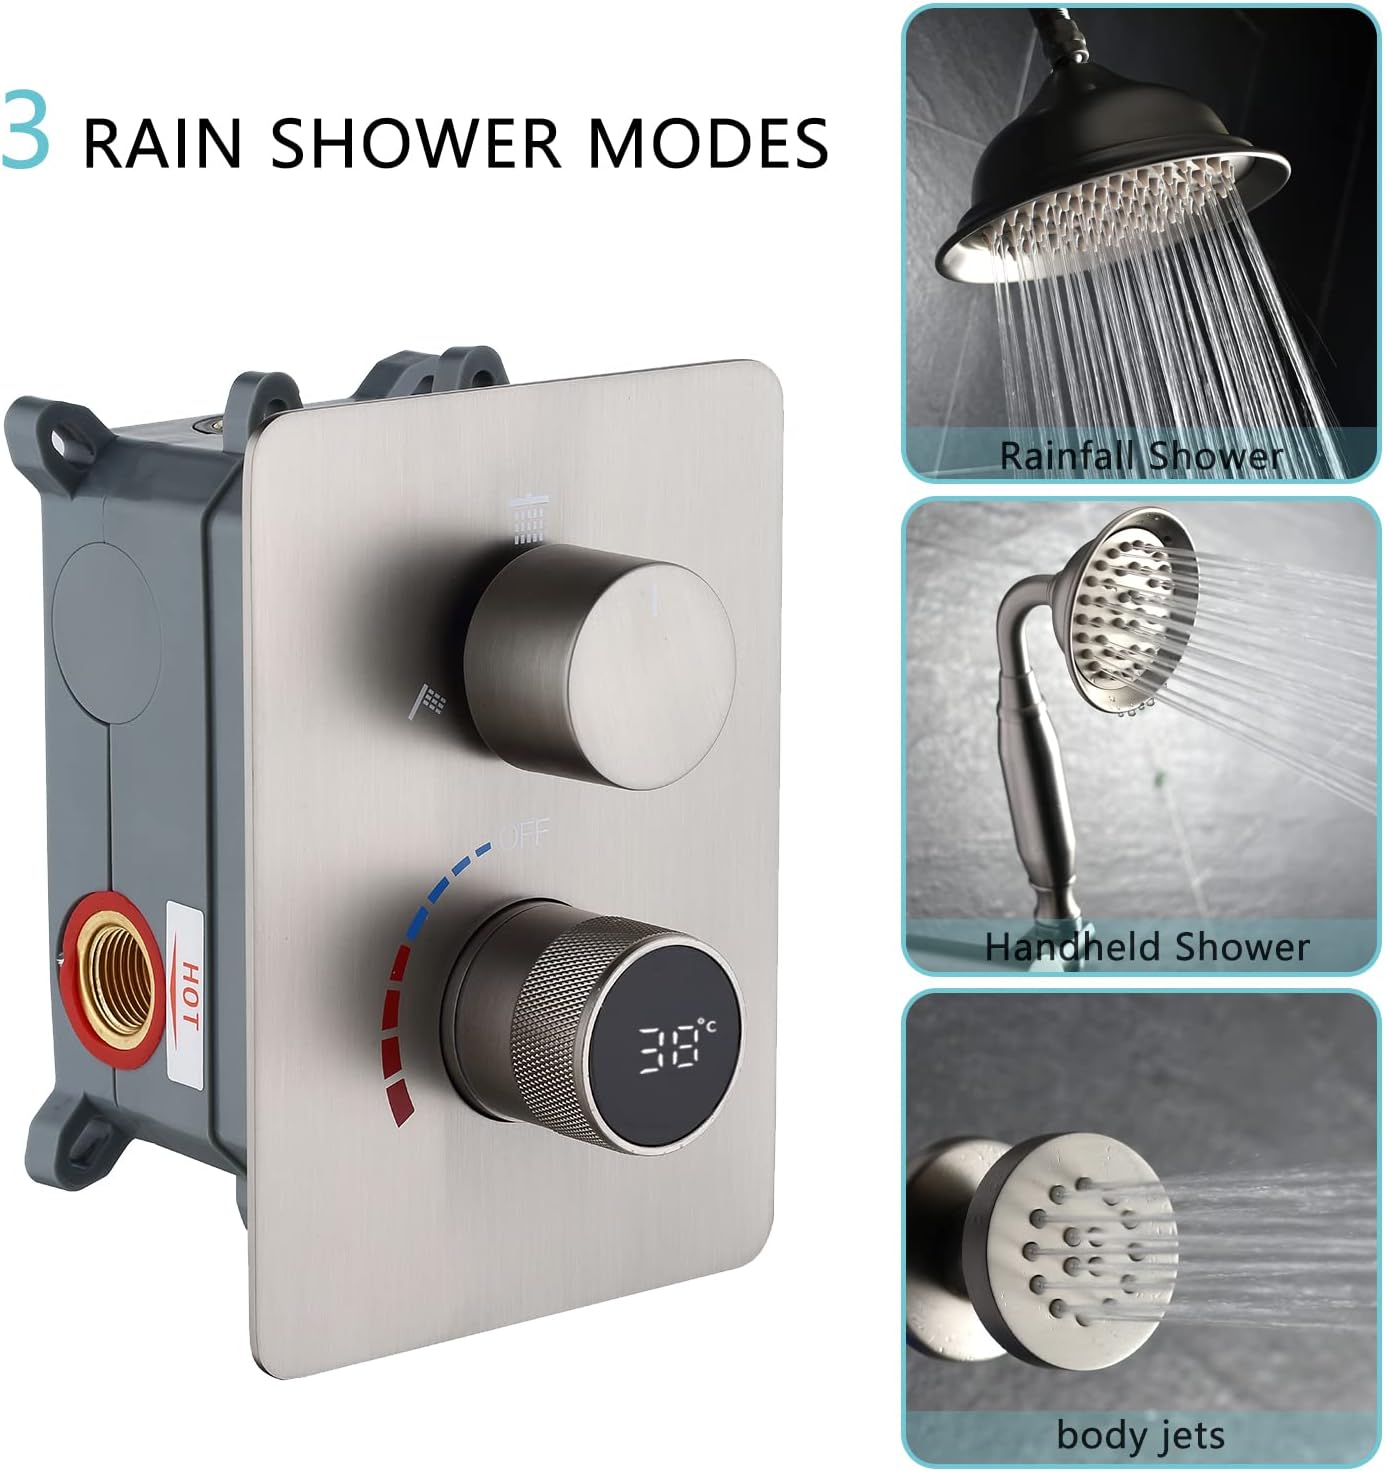 &#226;&#128;&#142;WHSHOWER 3 Functions Brass Shower Diverter Valve Shower Faucet Valve Bathroom Shower Mixer Valve LED Digital Display Mixer Valve in Brus